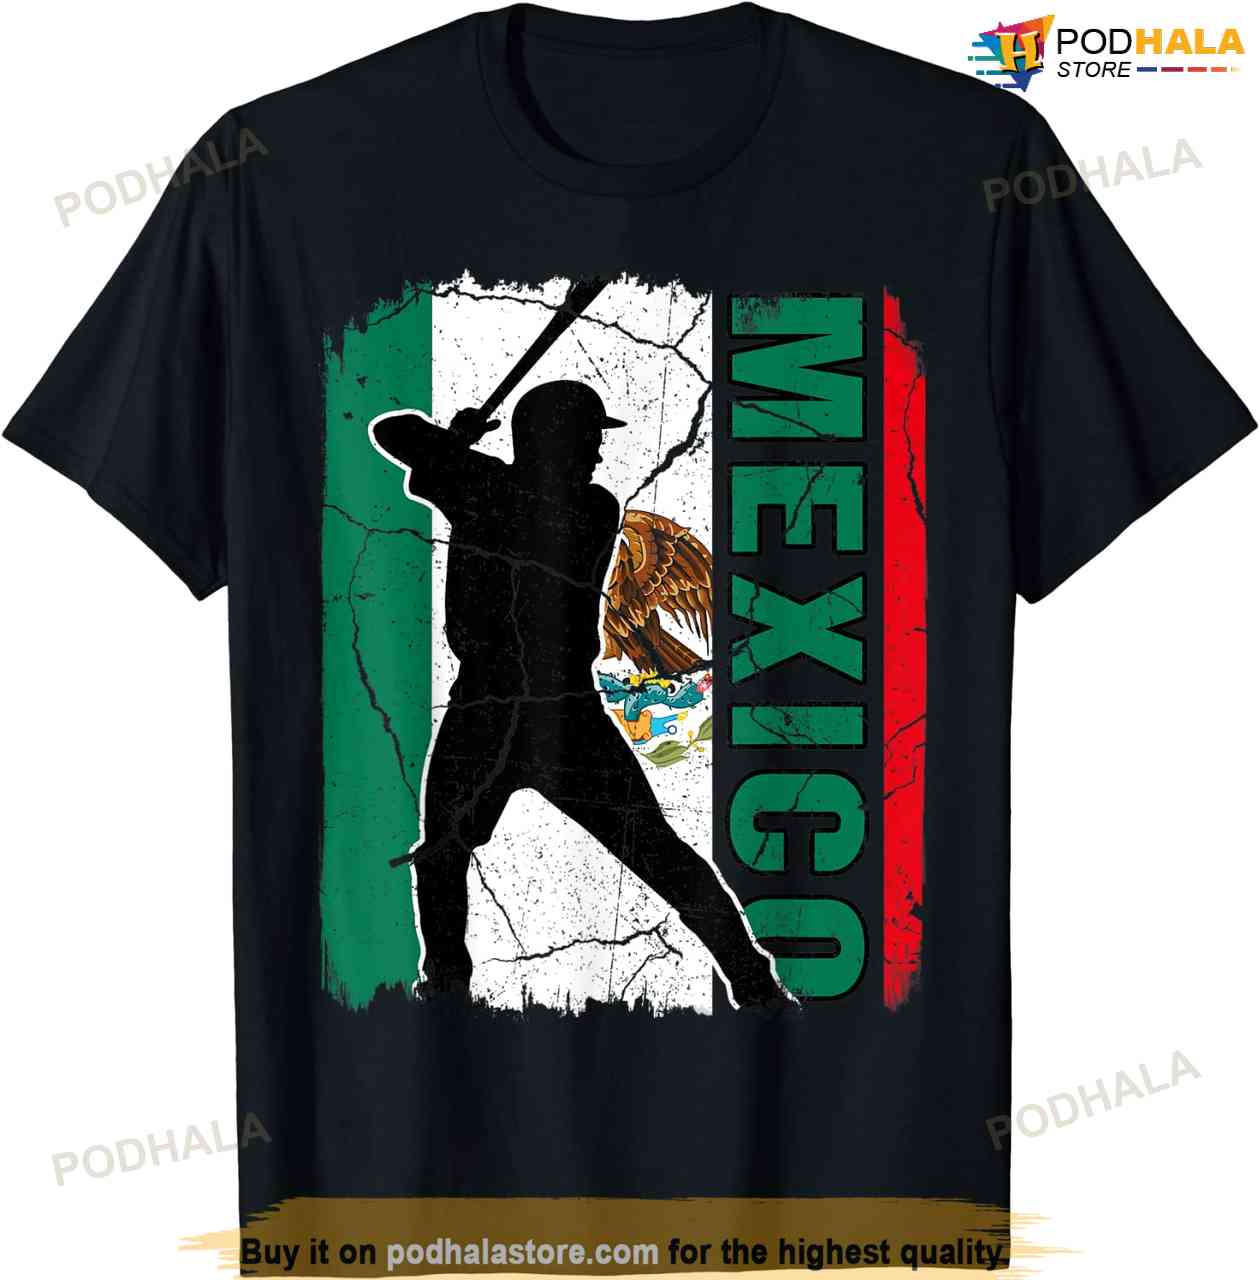 AVAILABLE Mexico Flag Baseball Jersey